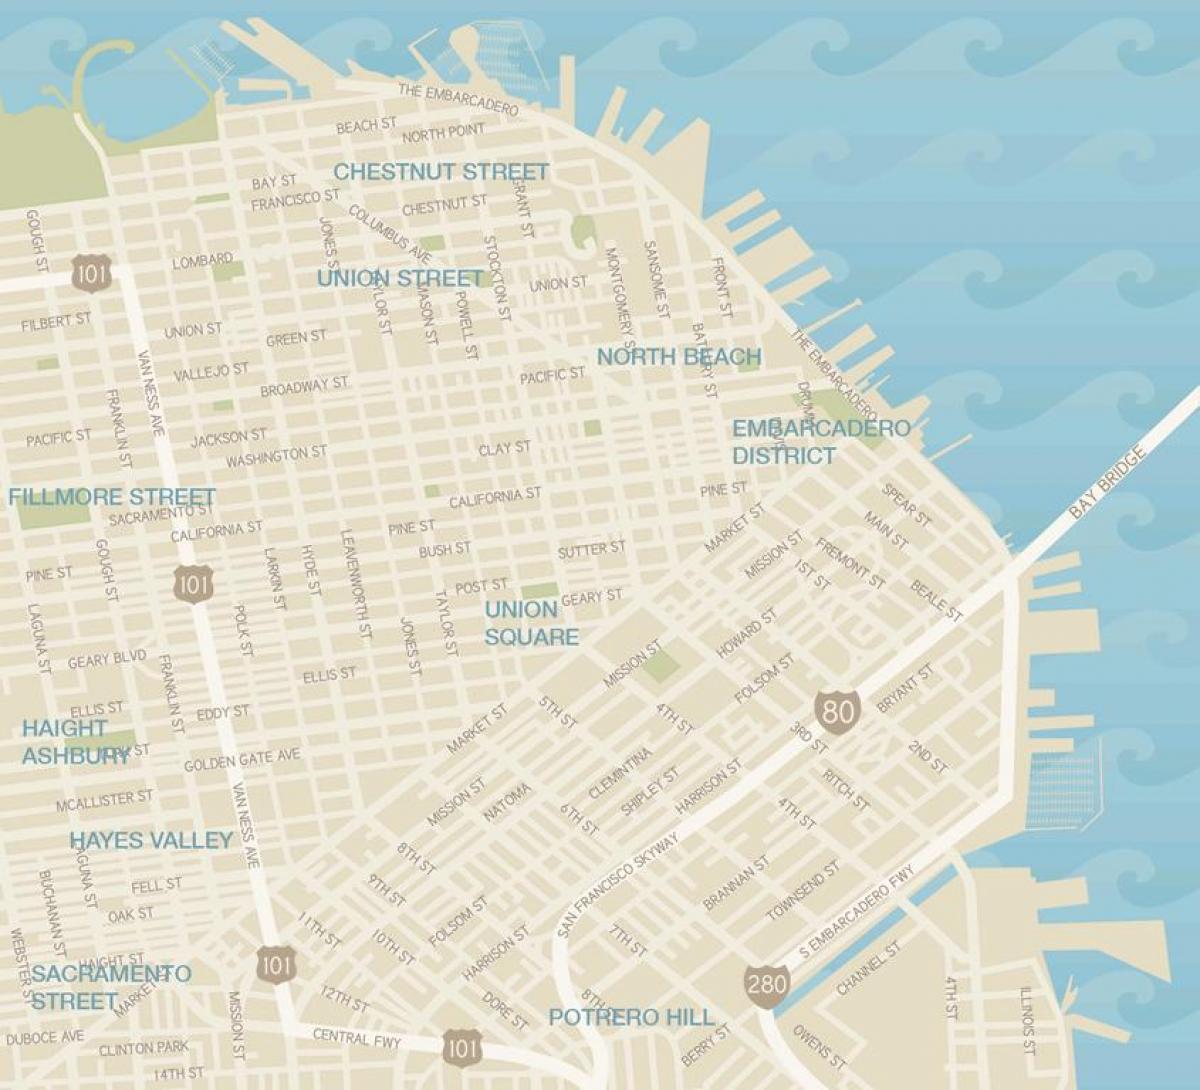 Kort af San Francisco fatahverfinu